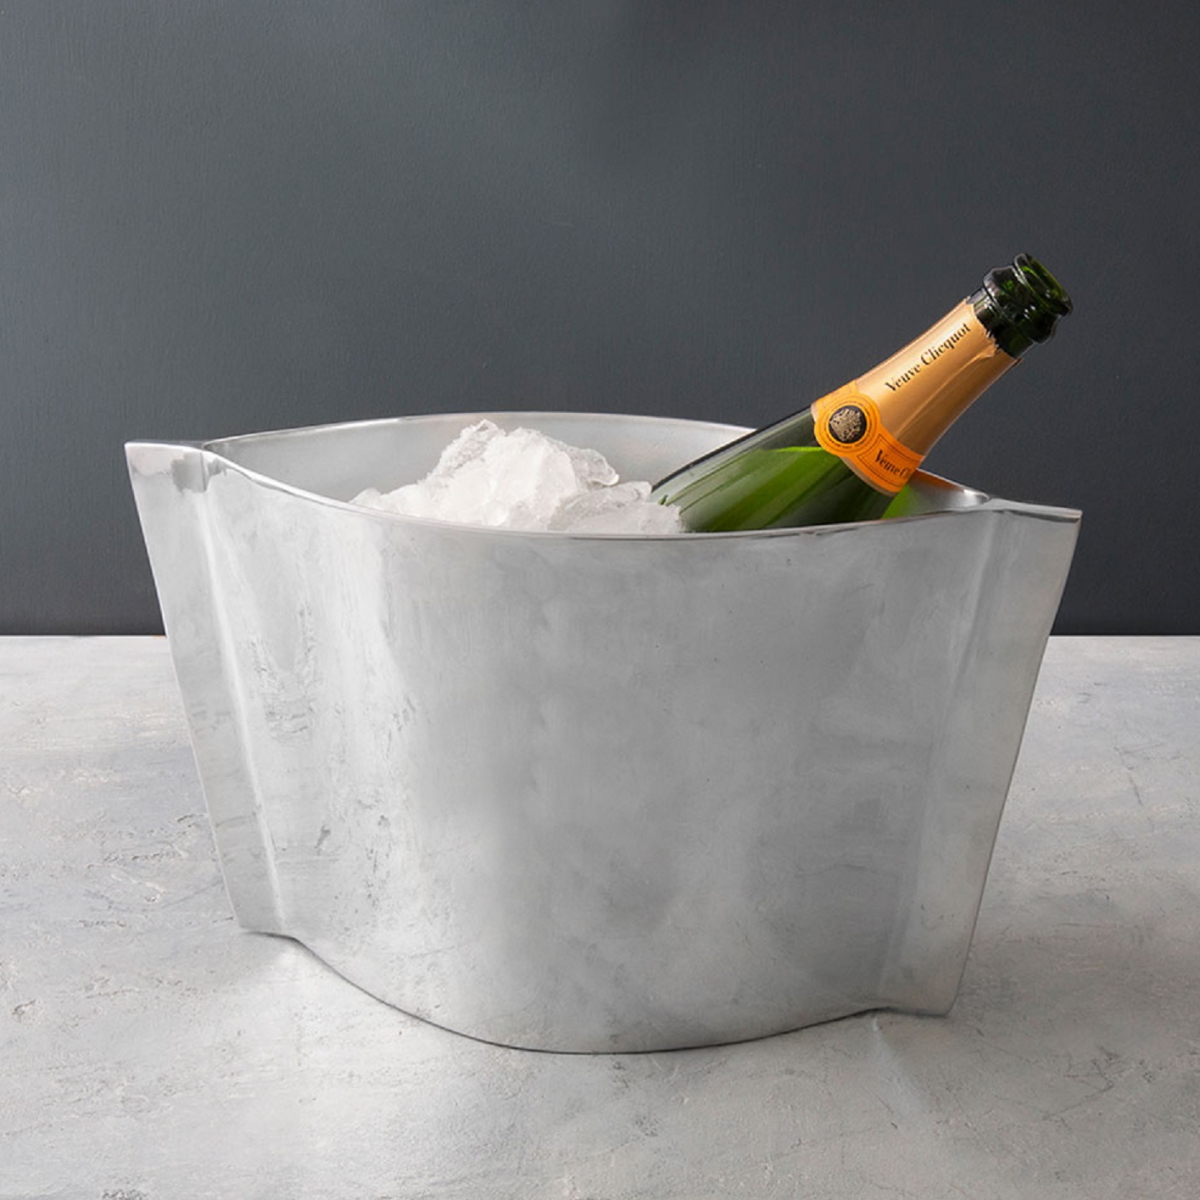 Cake-Shaped Ice Buckets : champagne ice bucket